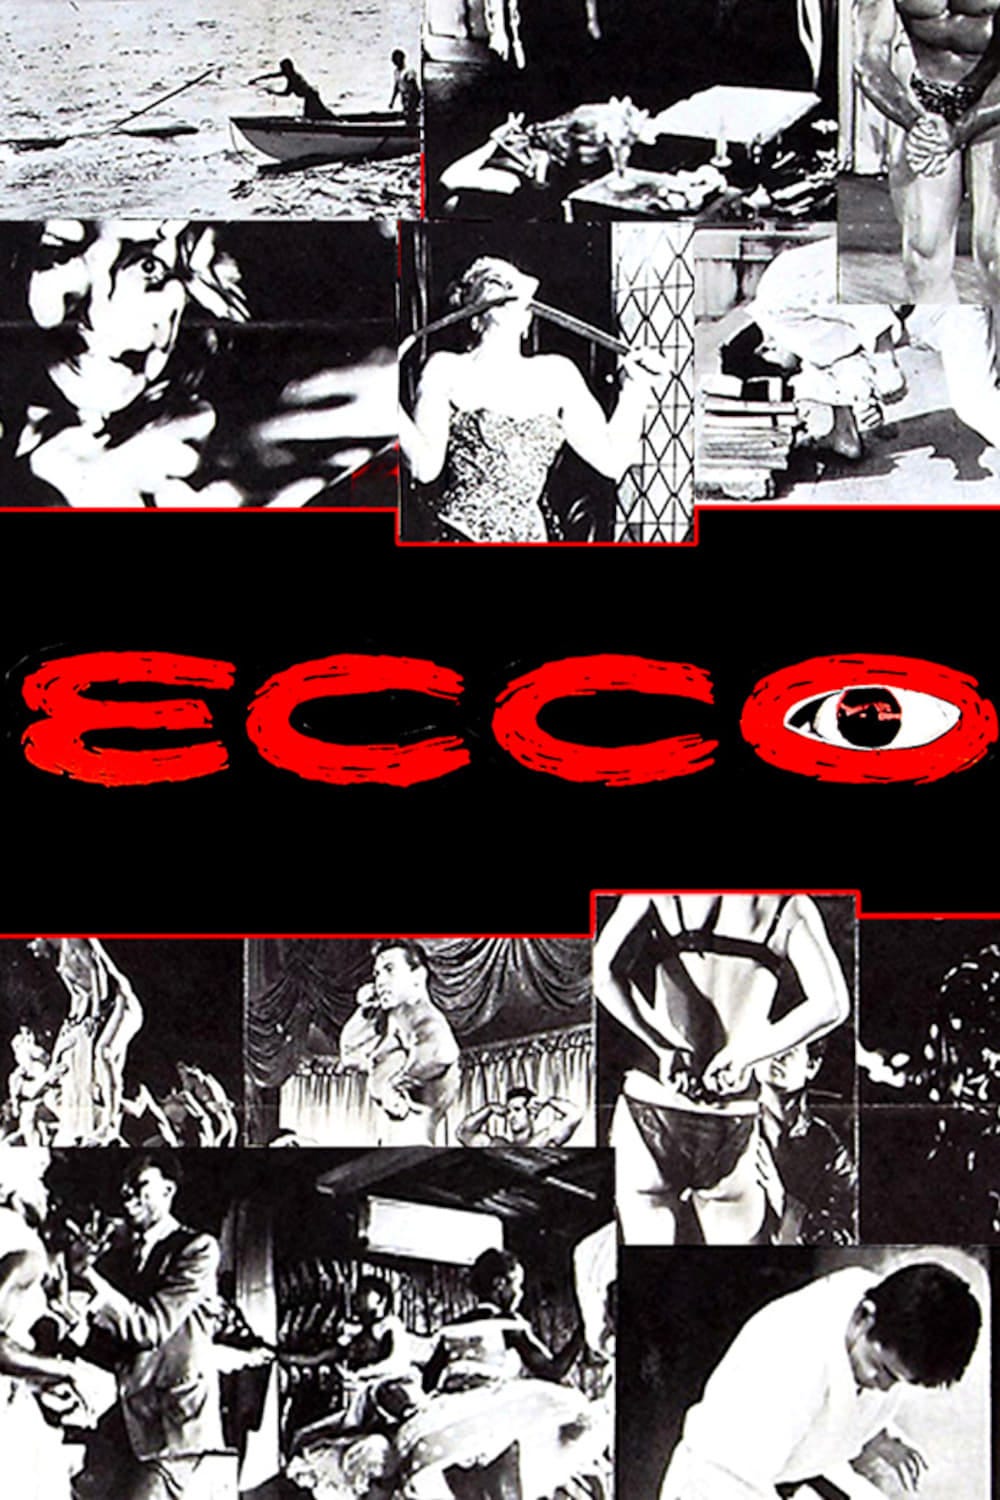 Ecco (1963) | Poster